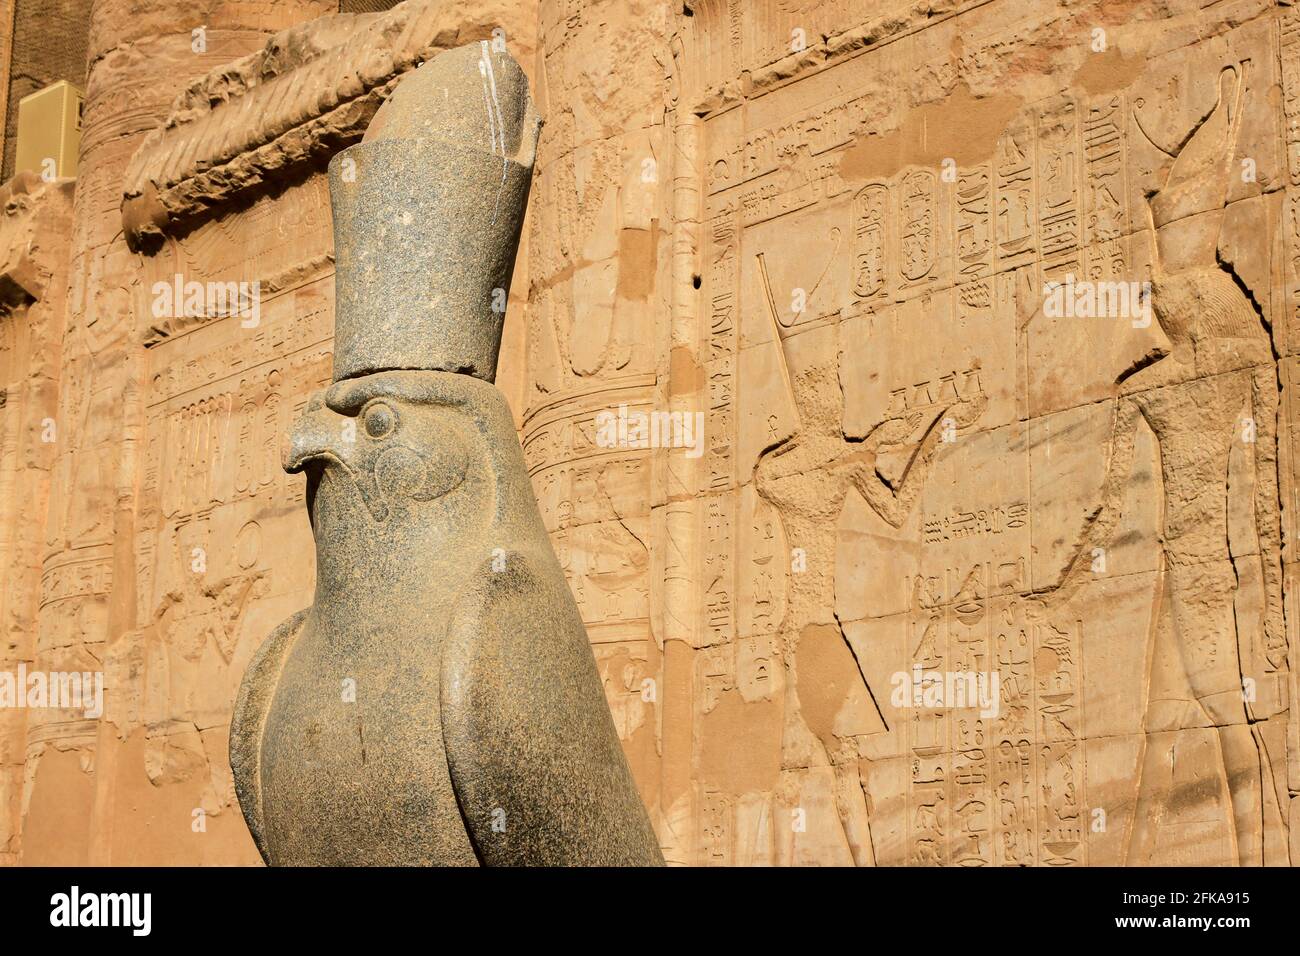 Horus statue in the courtyard of the Temple of Edfu with hieroglyphics on wall, Edfu, Egypt Stock Photo